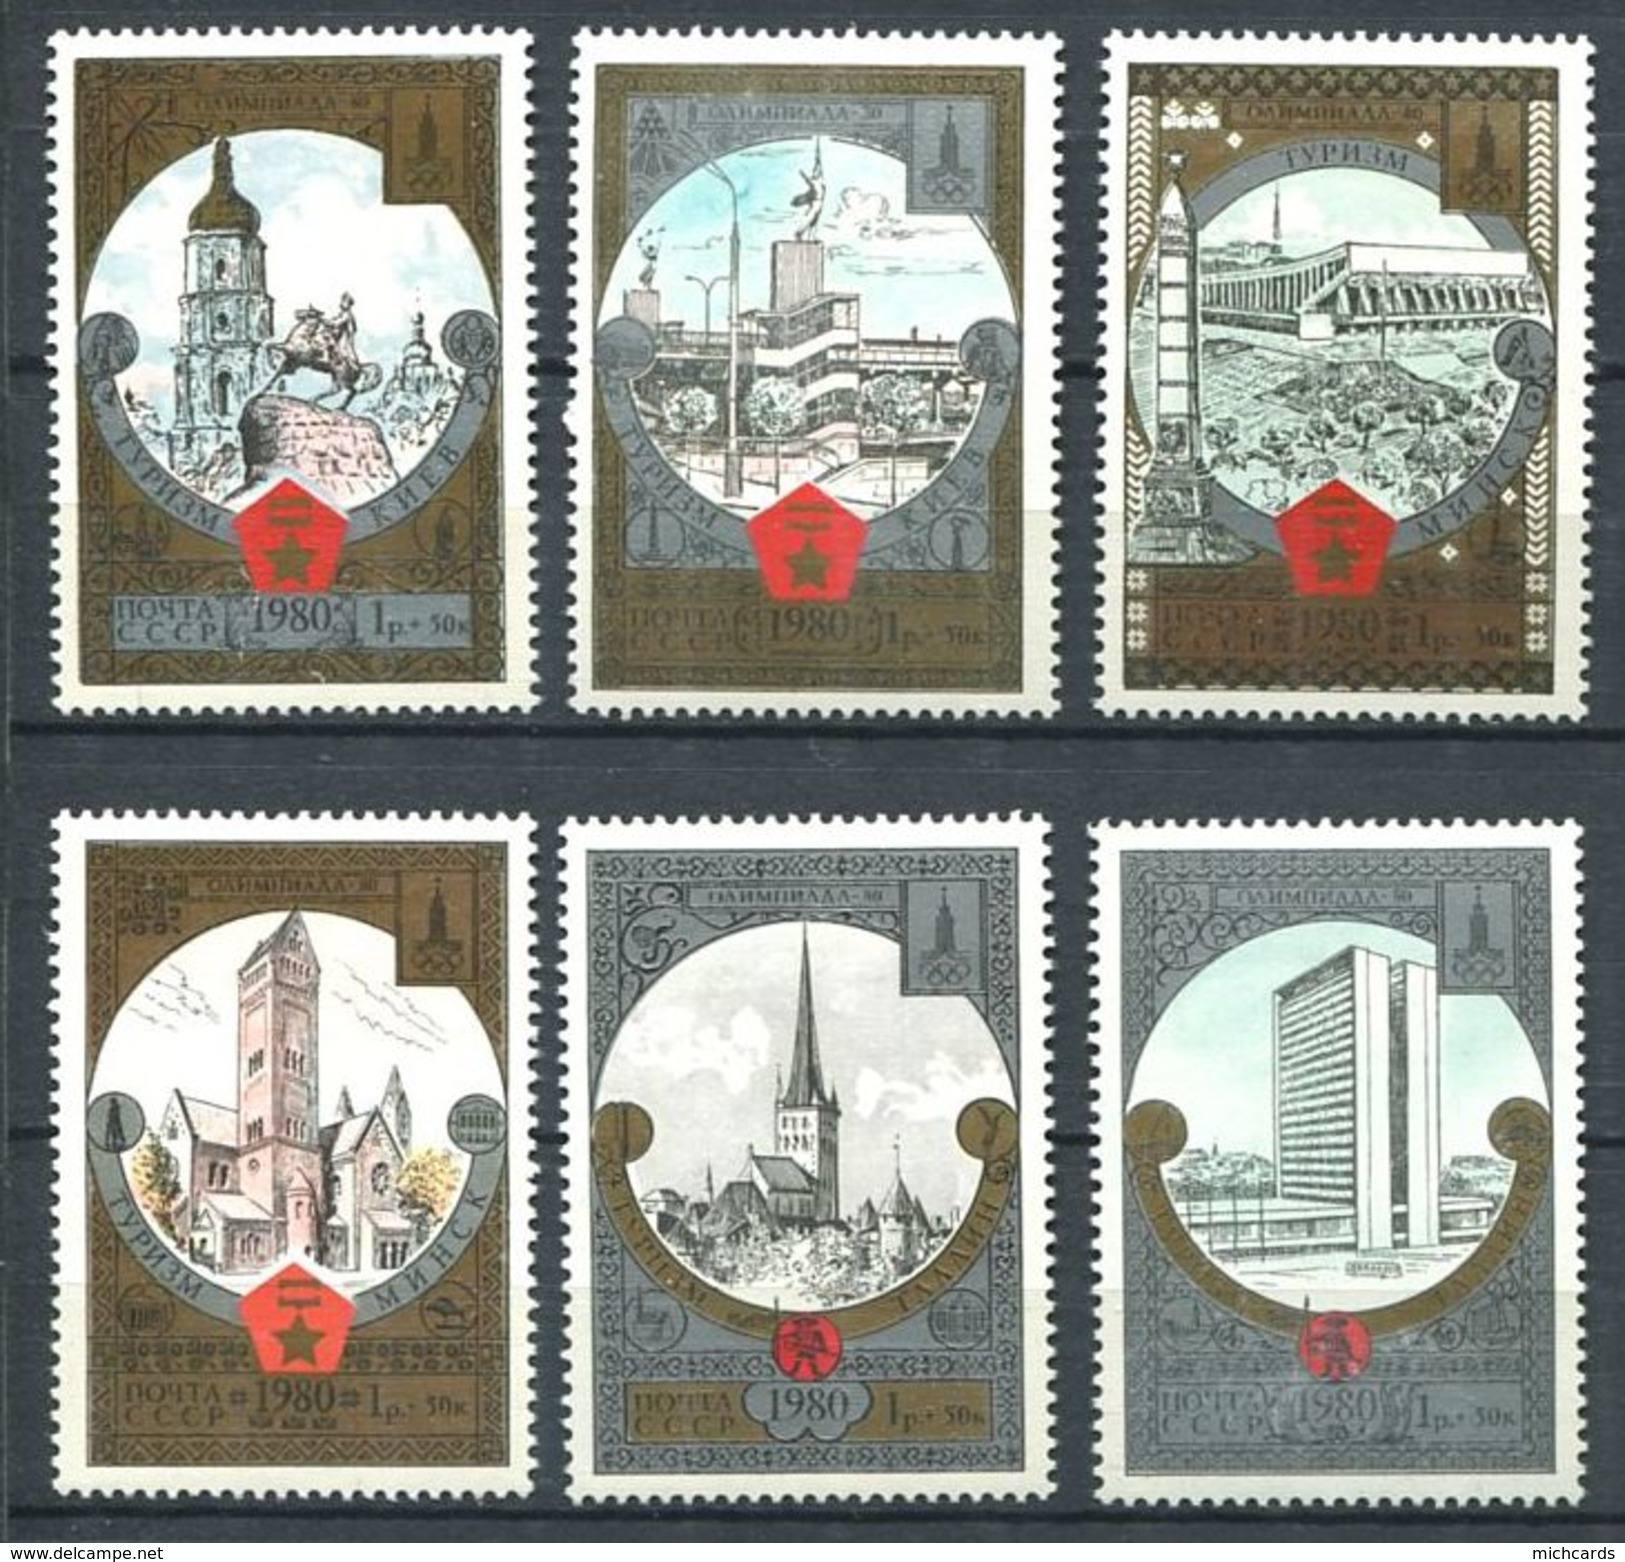 187 RUSSIE (URSS) 1980 - Yvert 4688/93 - Tourisme Armoirie Embleme JO - Neuf ** (MNH) Sans Trace De Charniere - Neufs